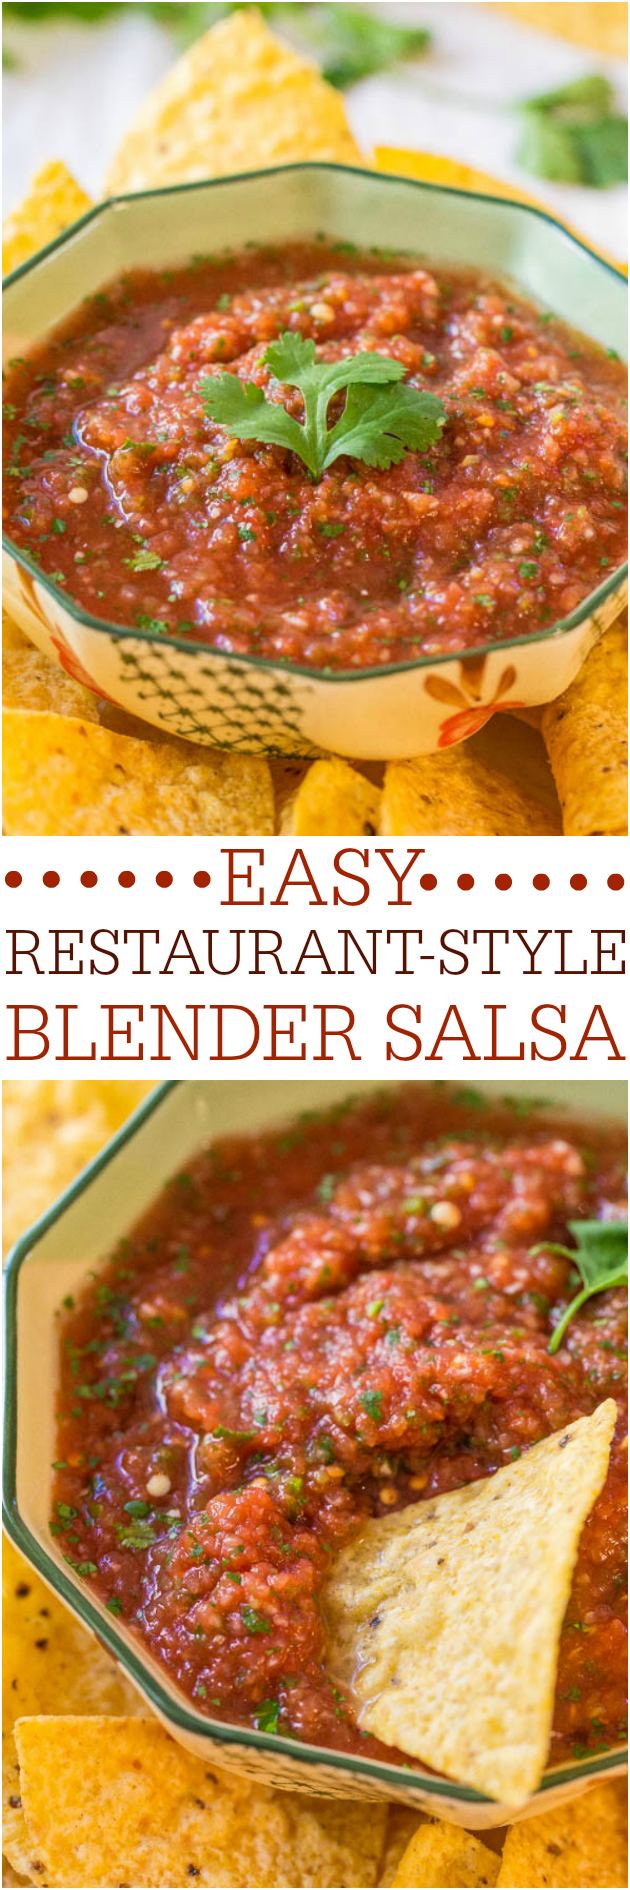 Easy salsa recipe that makes restaurant style salsa